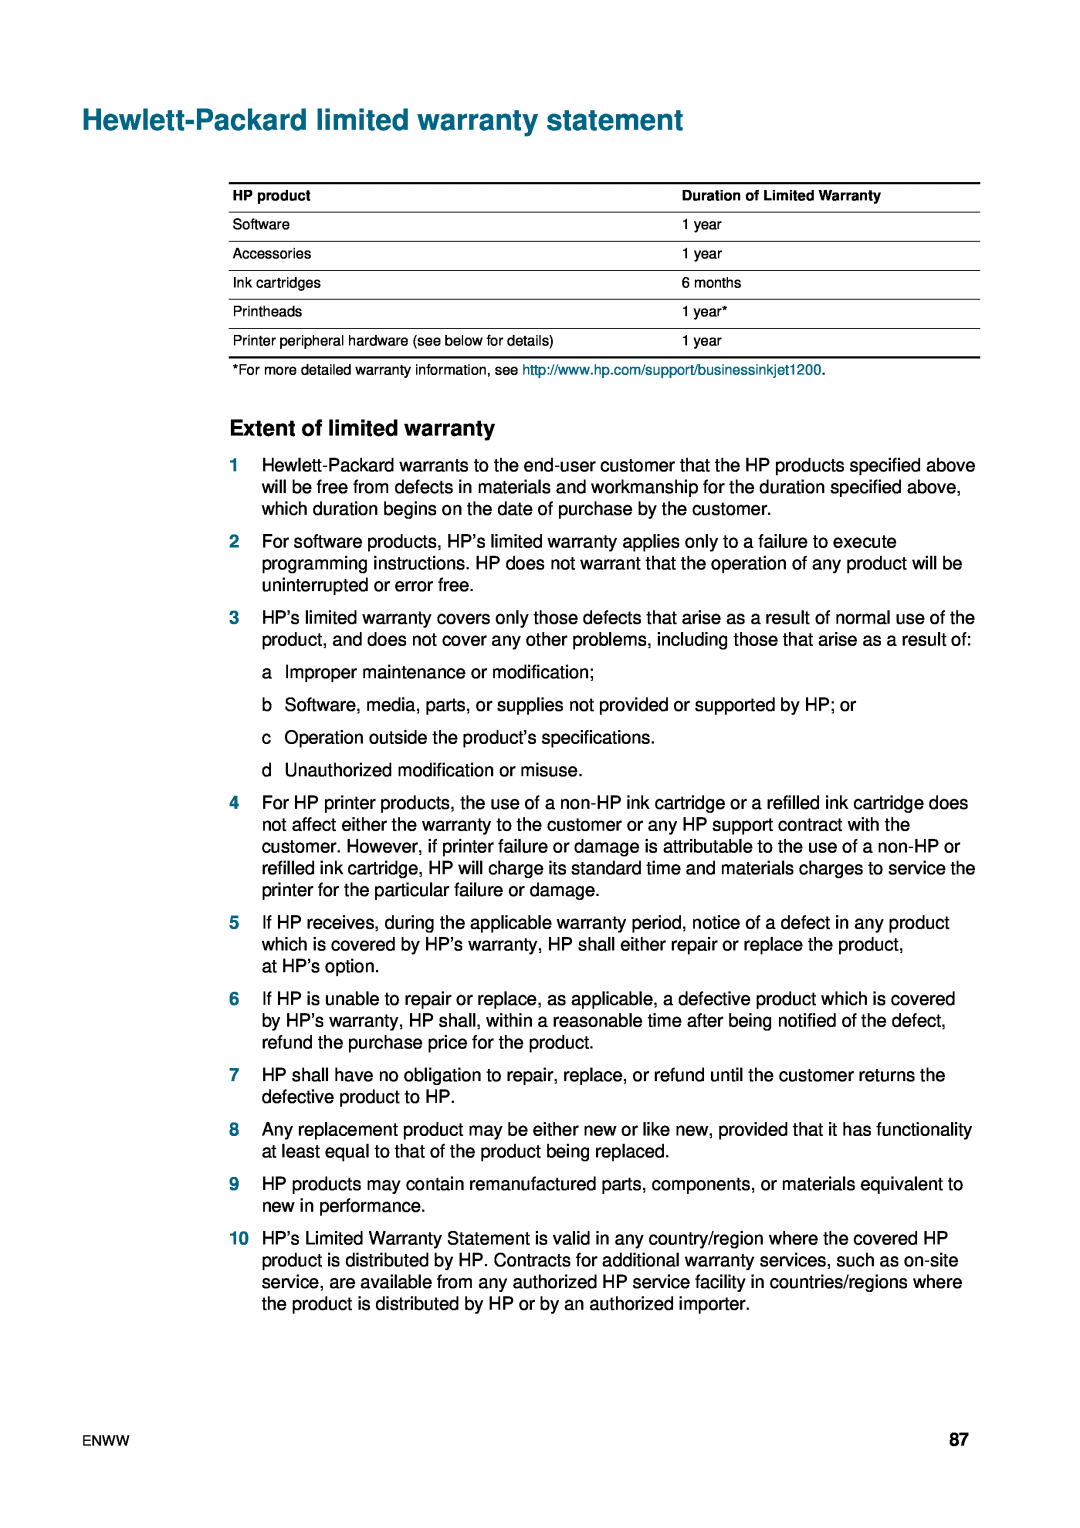 HP 1200 manual Hewlett-Packard limited warranty statement, Extent of limited warranty 